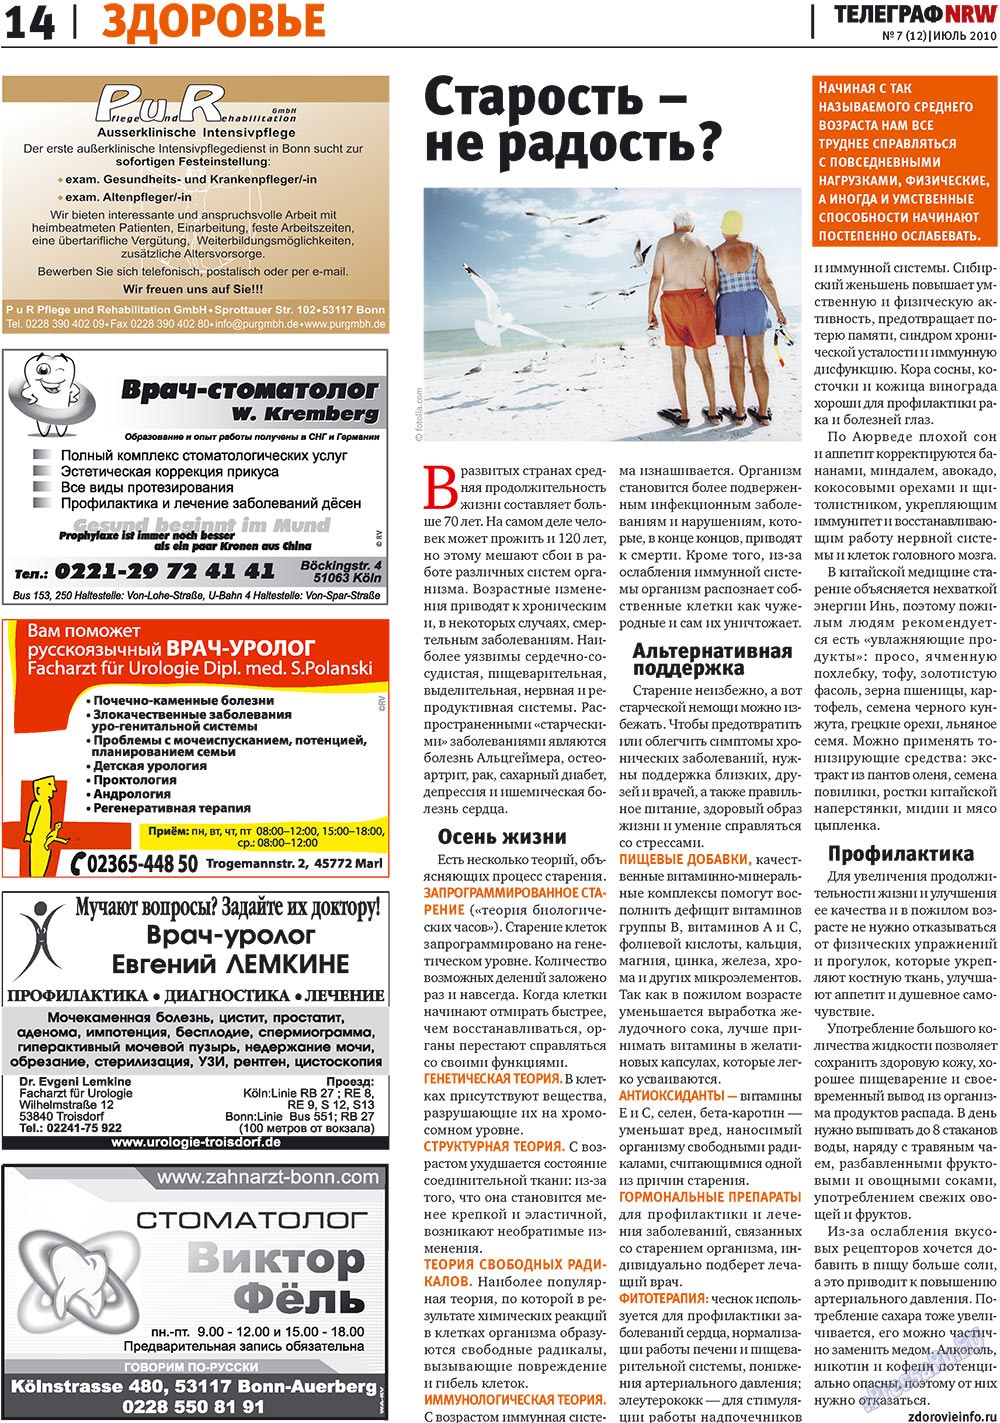 Телеграф NRW, газета. 2010 №7 стр.14